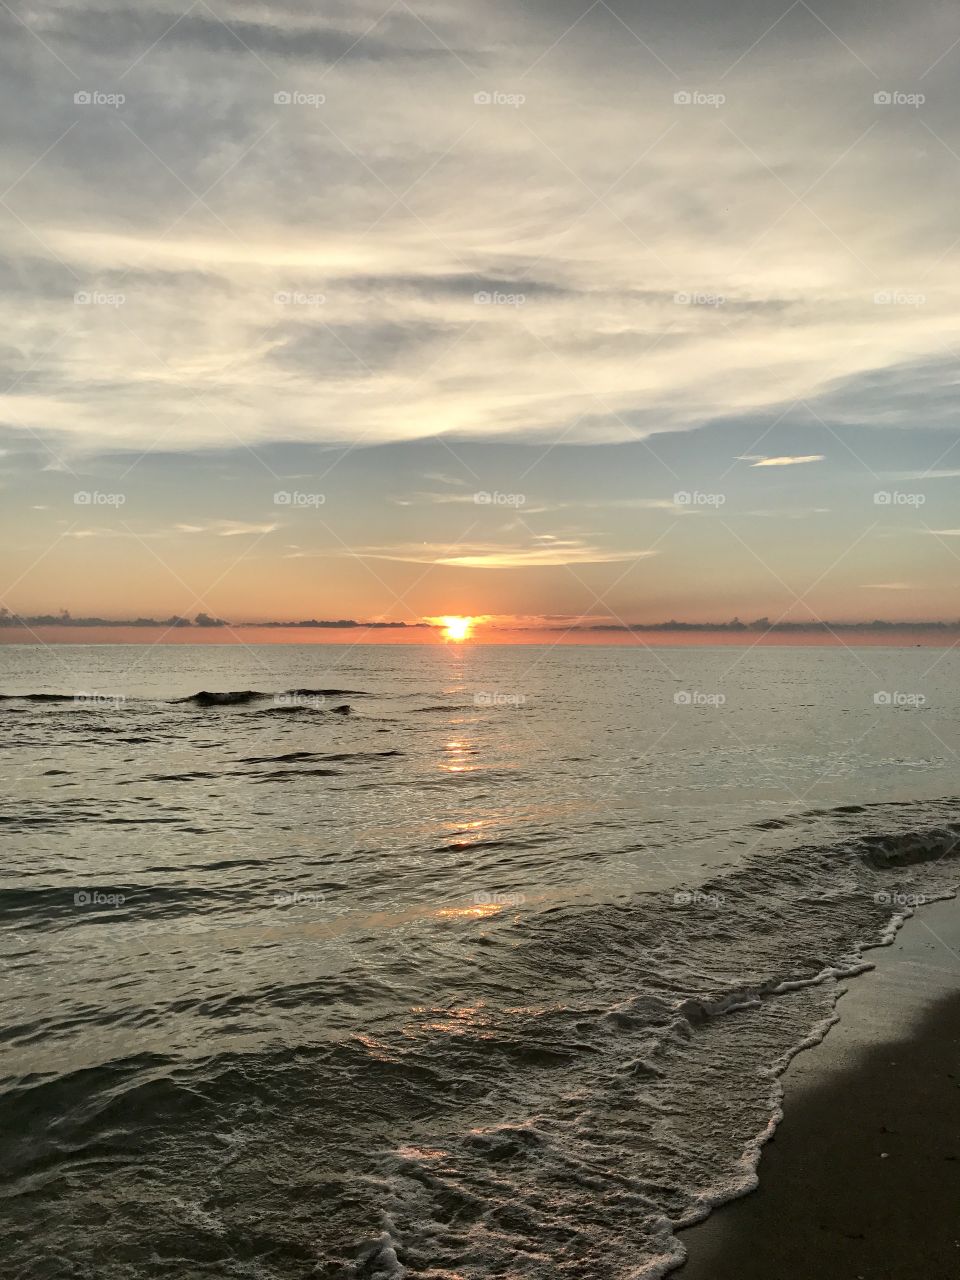 Sunset on Venice beach